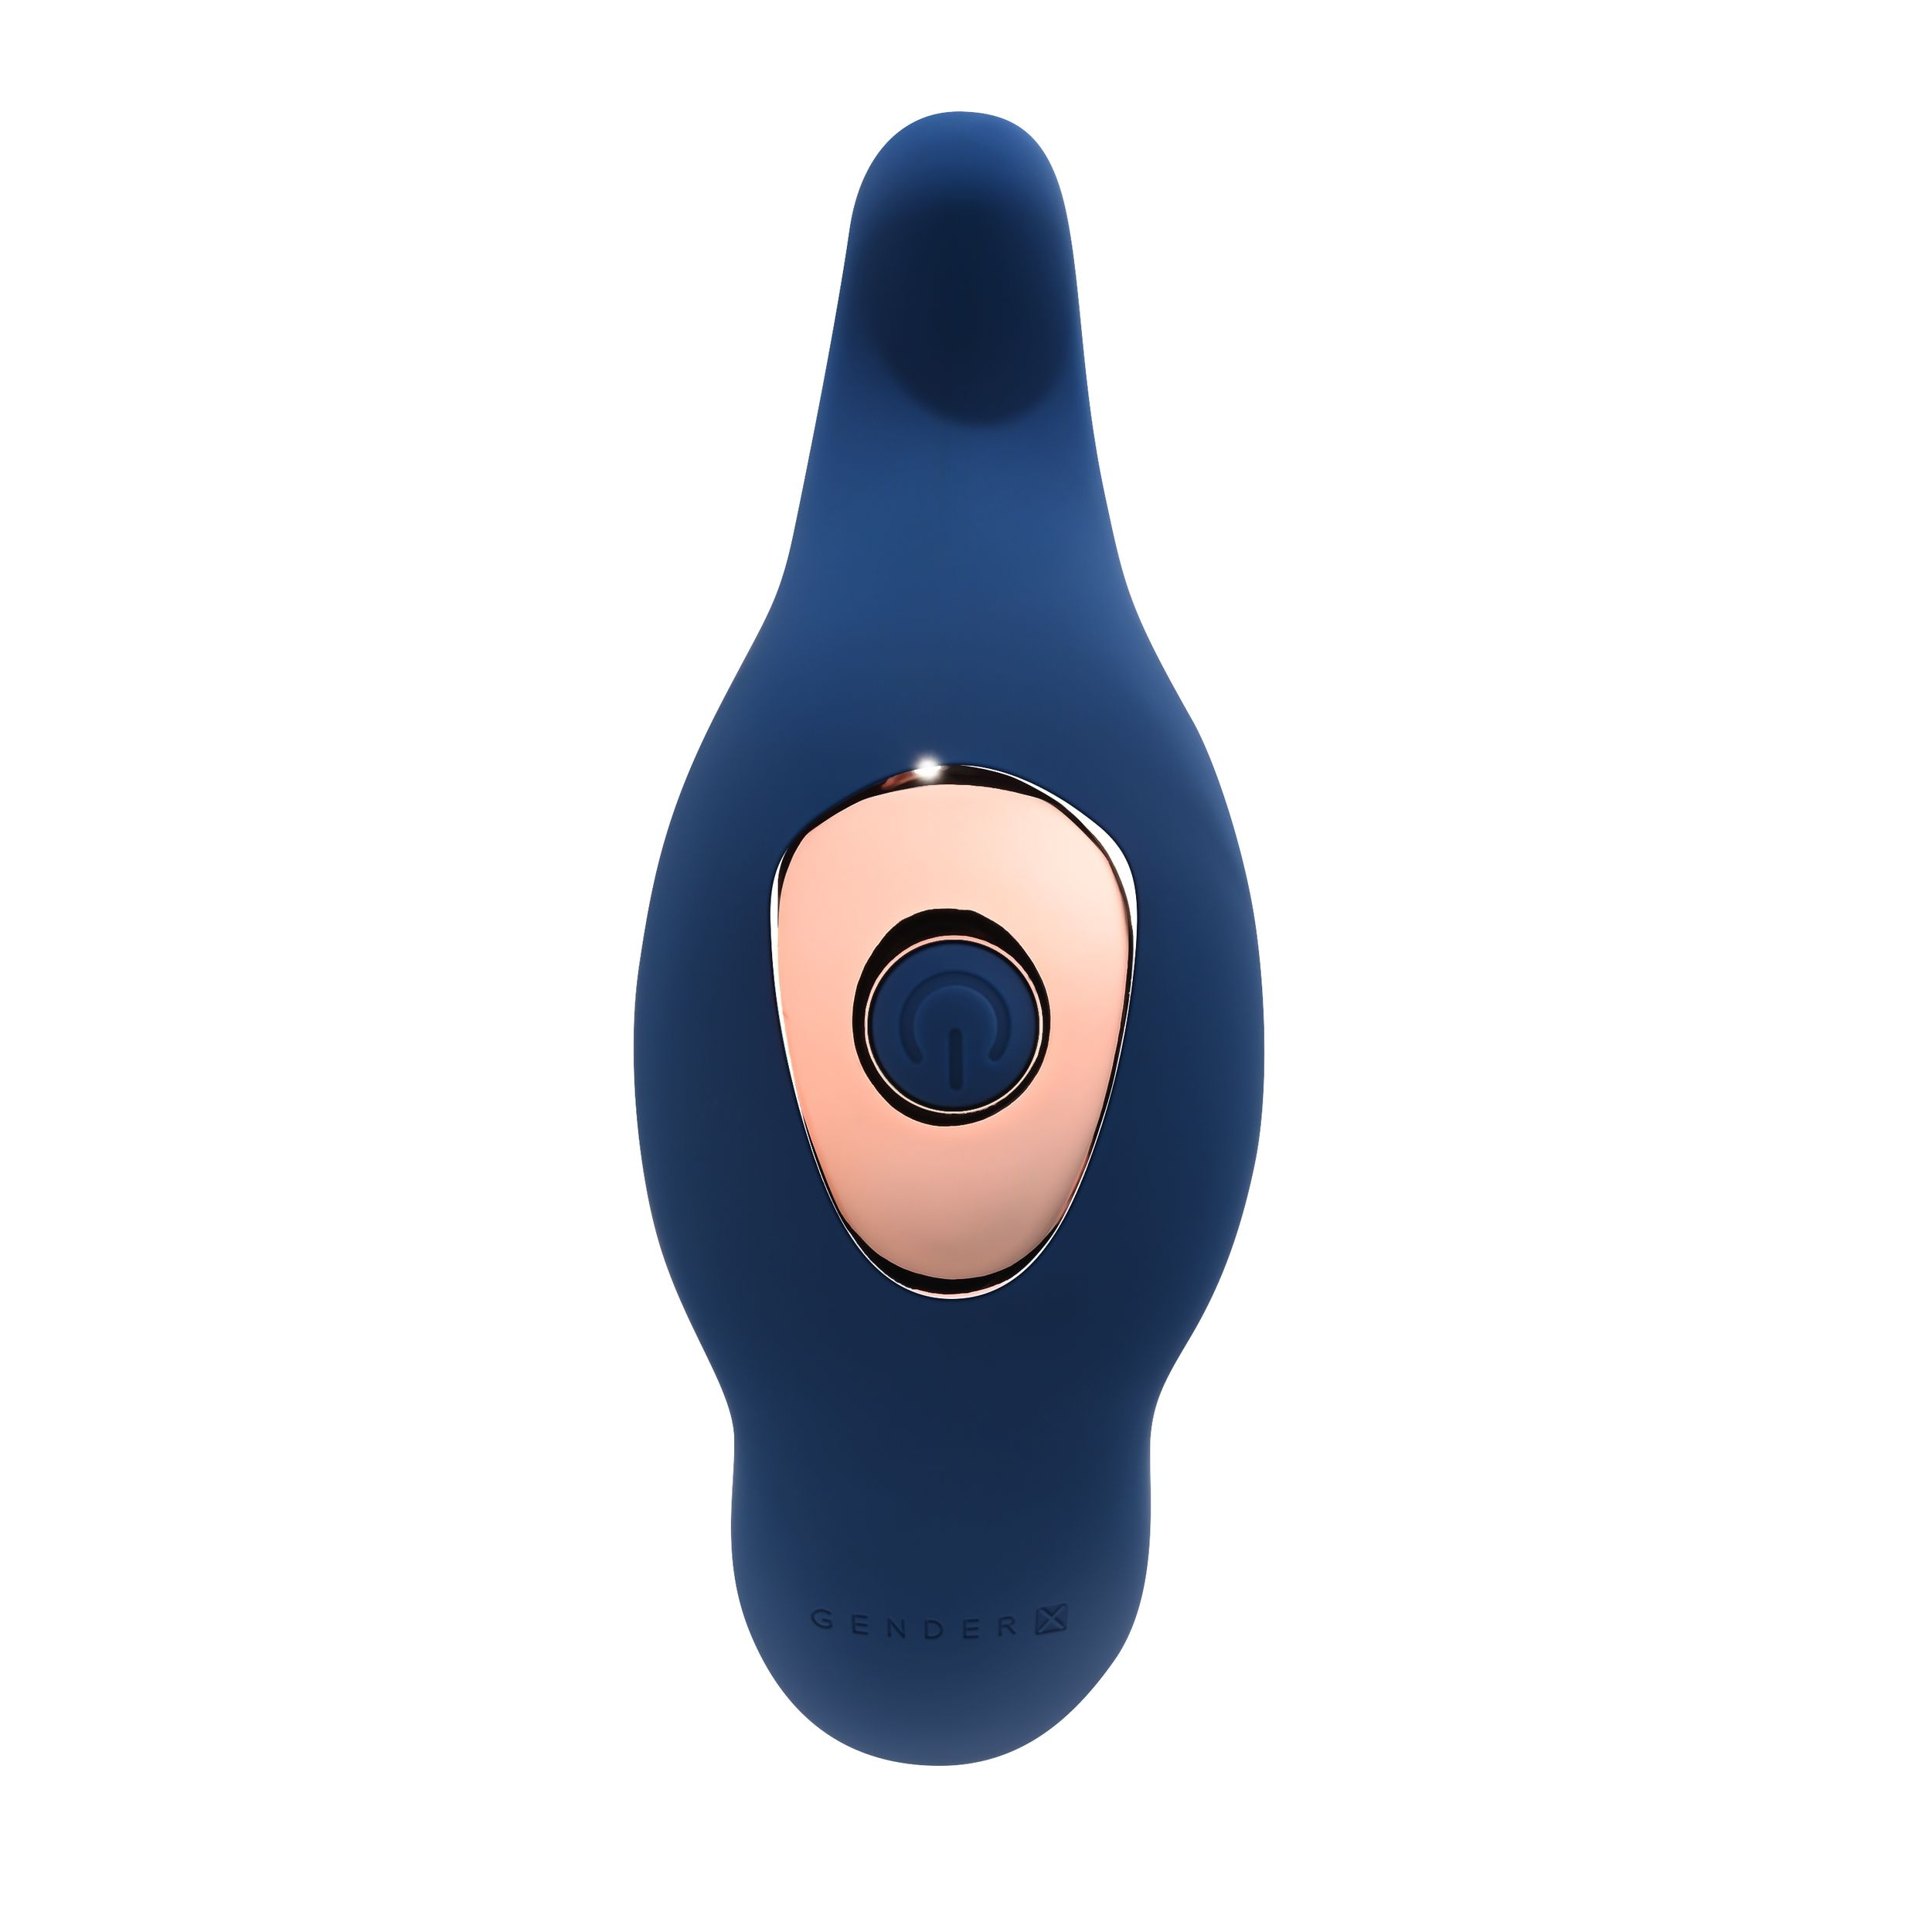 - Blue Blau Prostata - Evolved GENDER True X Vibrator analplugs-buttplugs